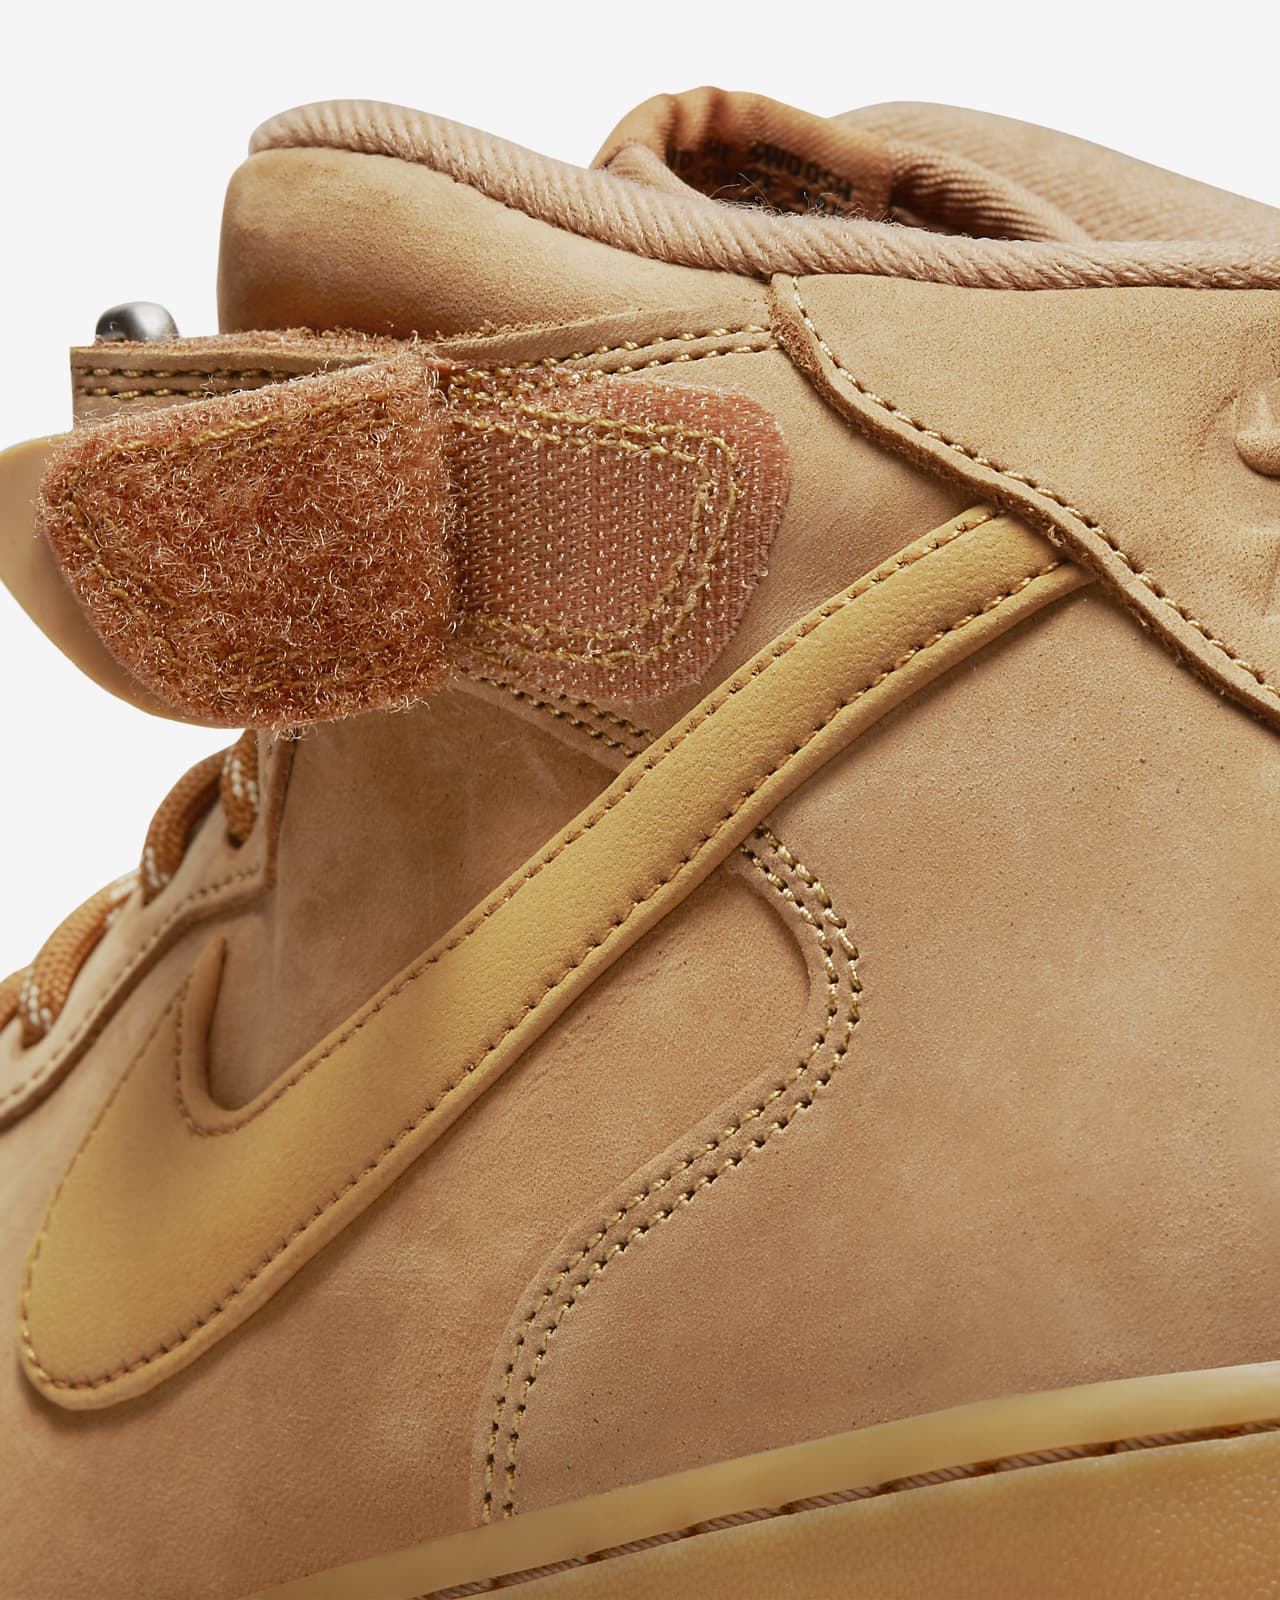 Nike Air Force 1 WB Flax Wheat Gum Brown On Feet Sneaker Review